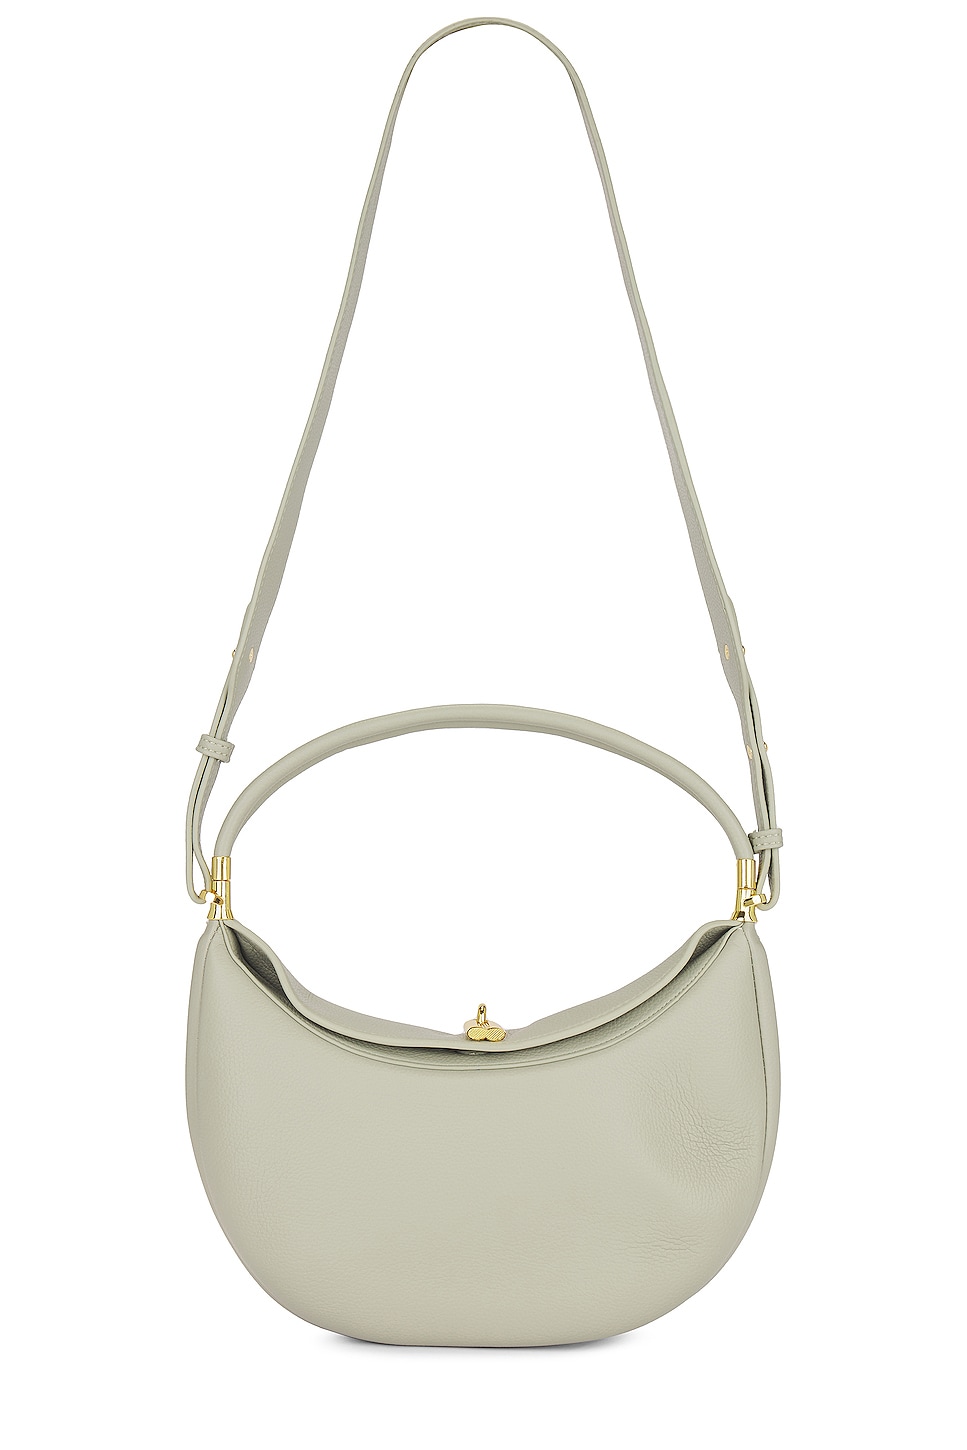 Buy BROWN BOSS Shoulder Bag for Women Vegan Leather Purse Classic Clutch  Handbag - SAGE GREEN at Amazon.in